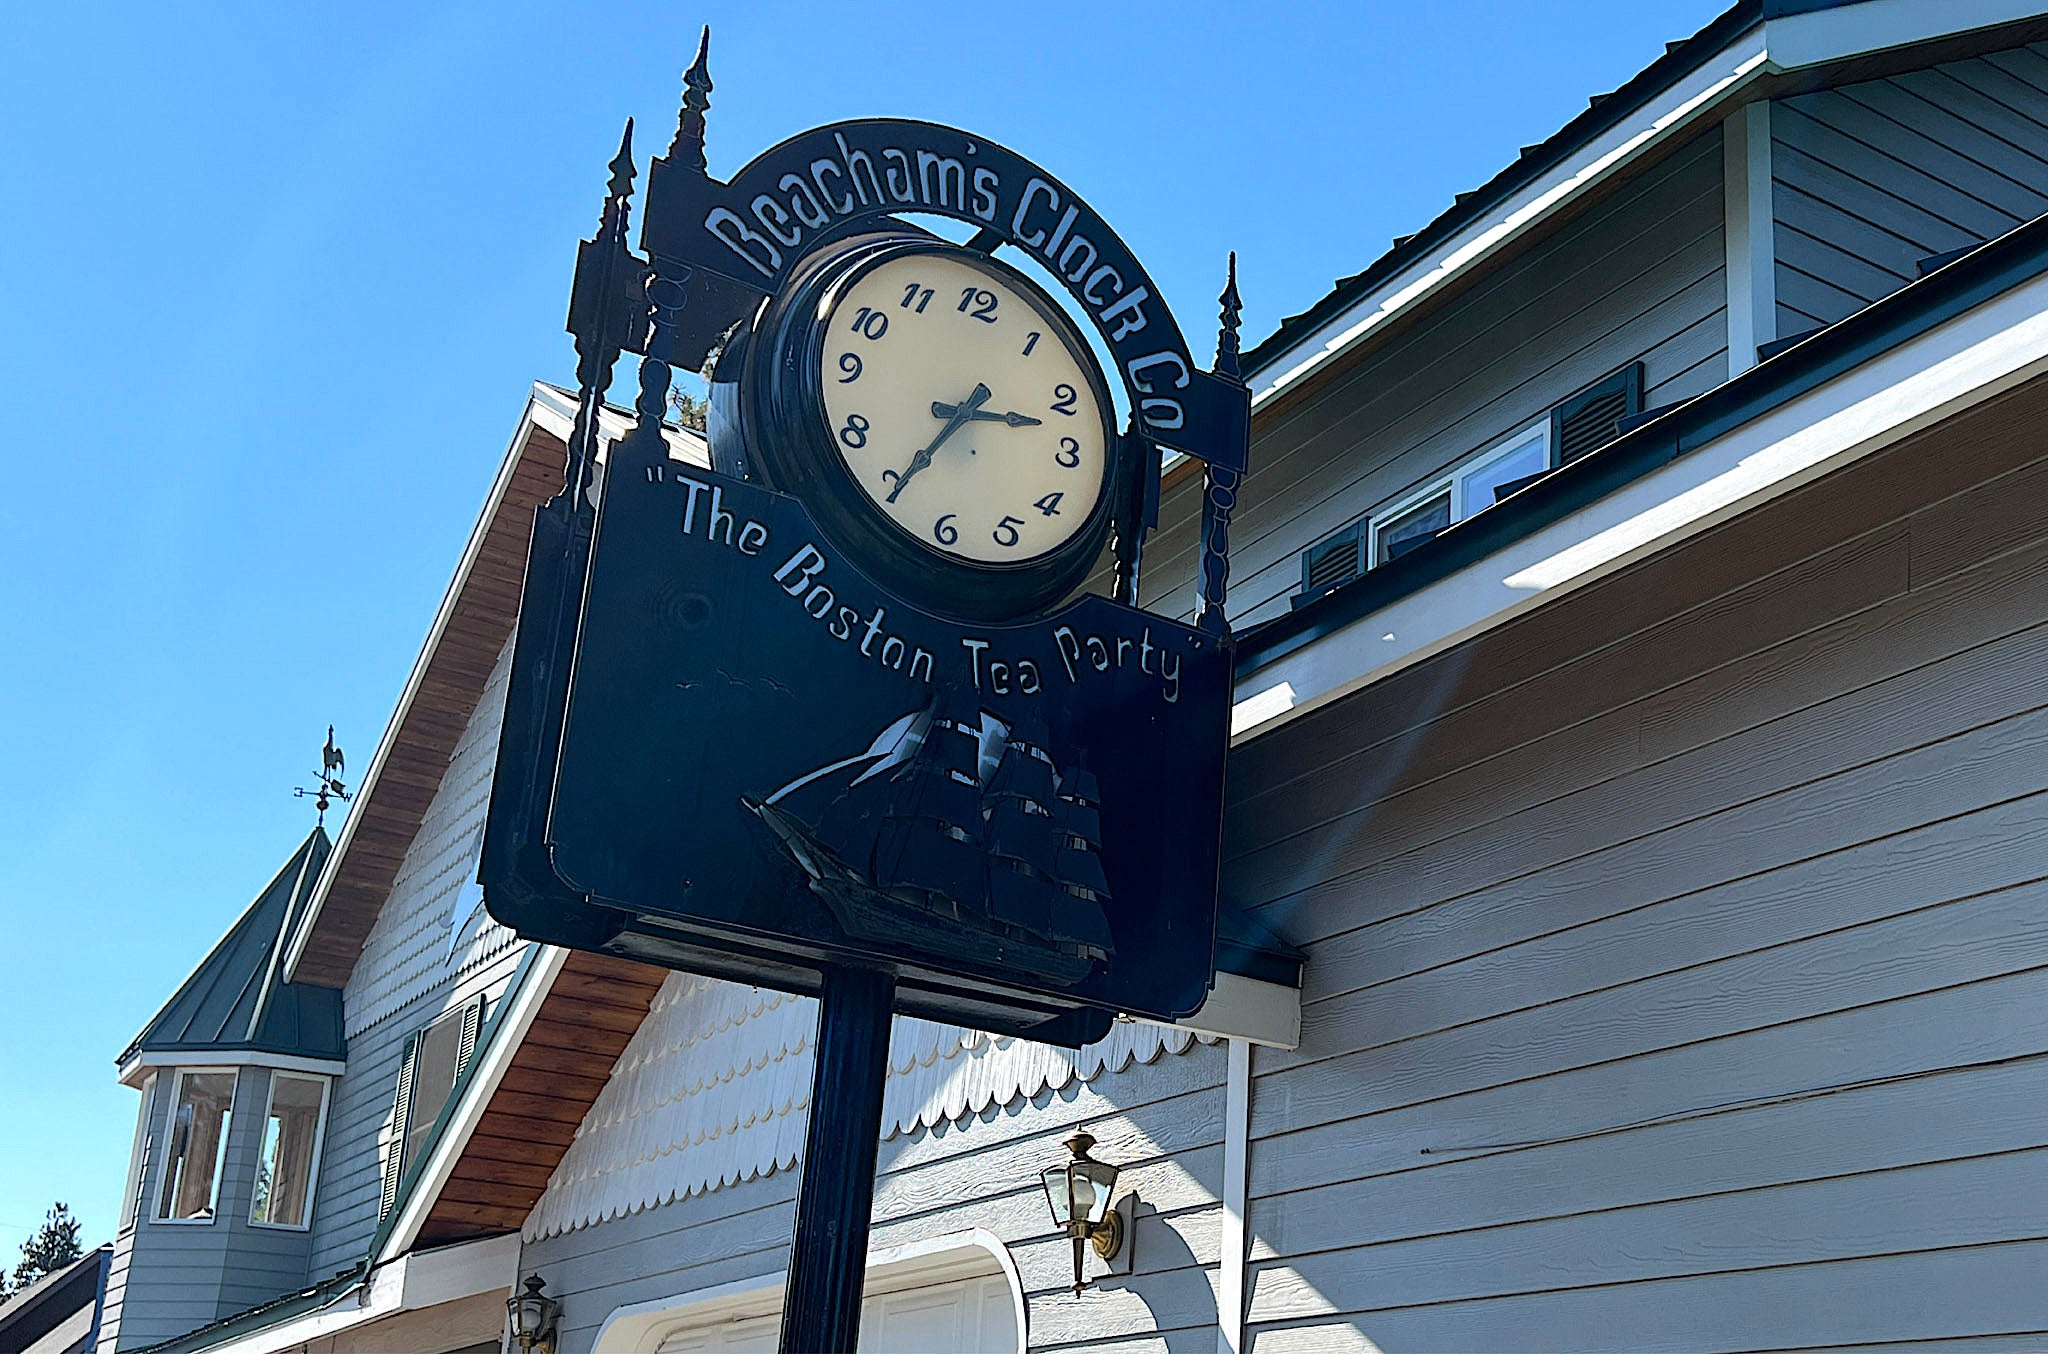 Beacham’s Clock Company in Sisters, Oregon